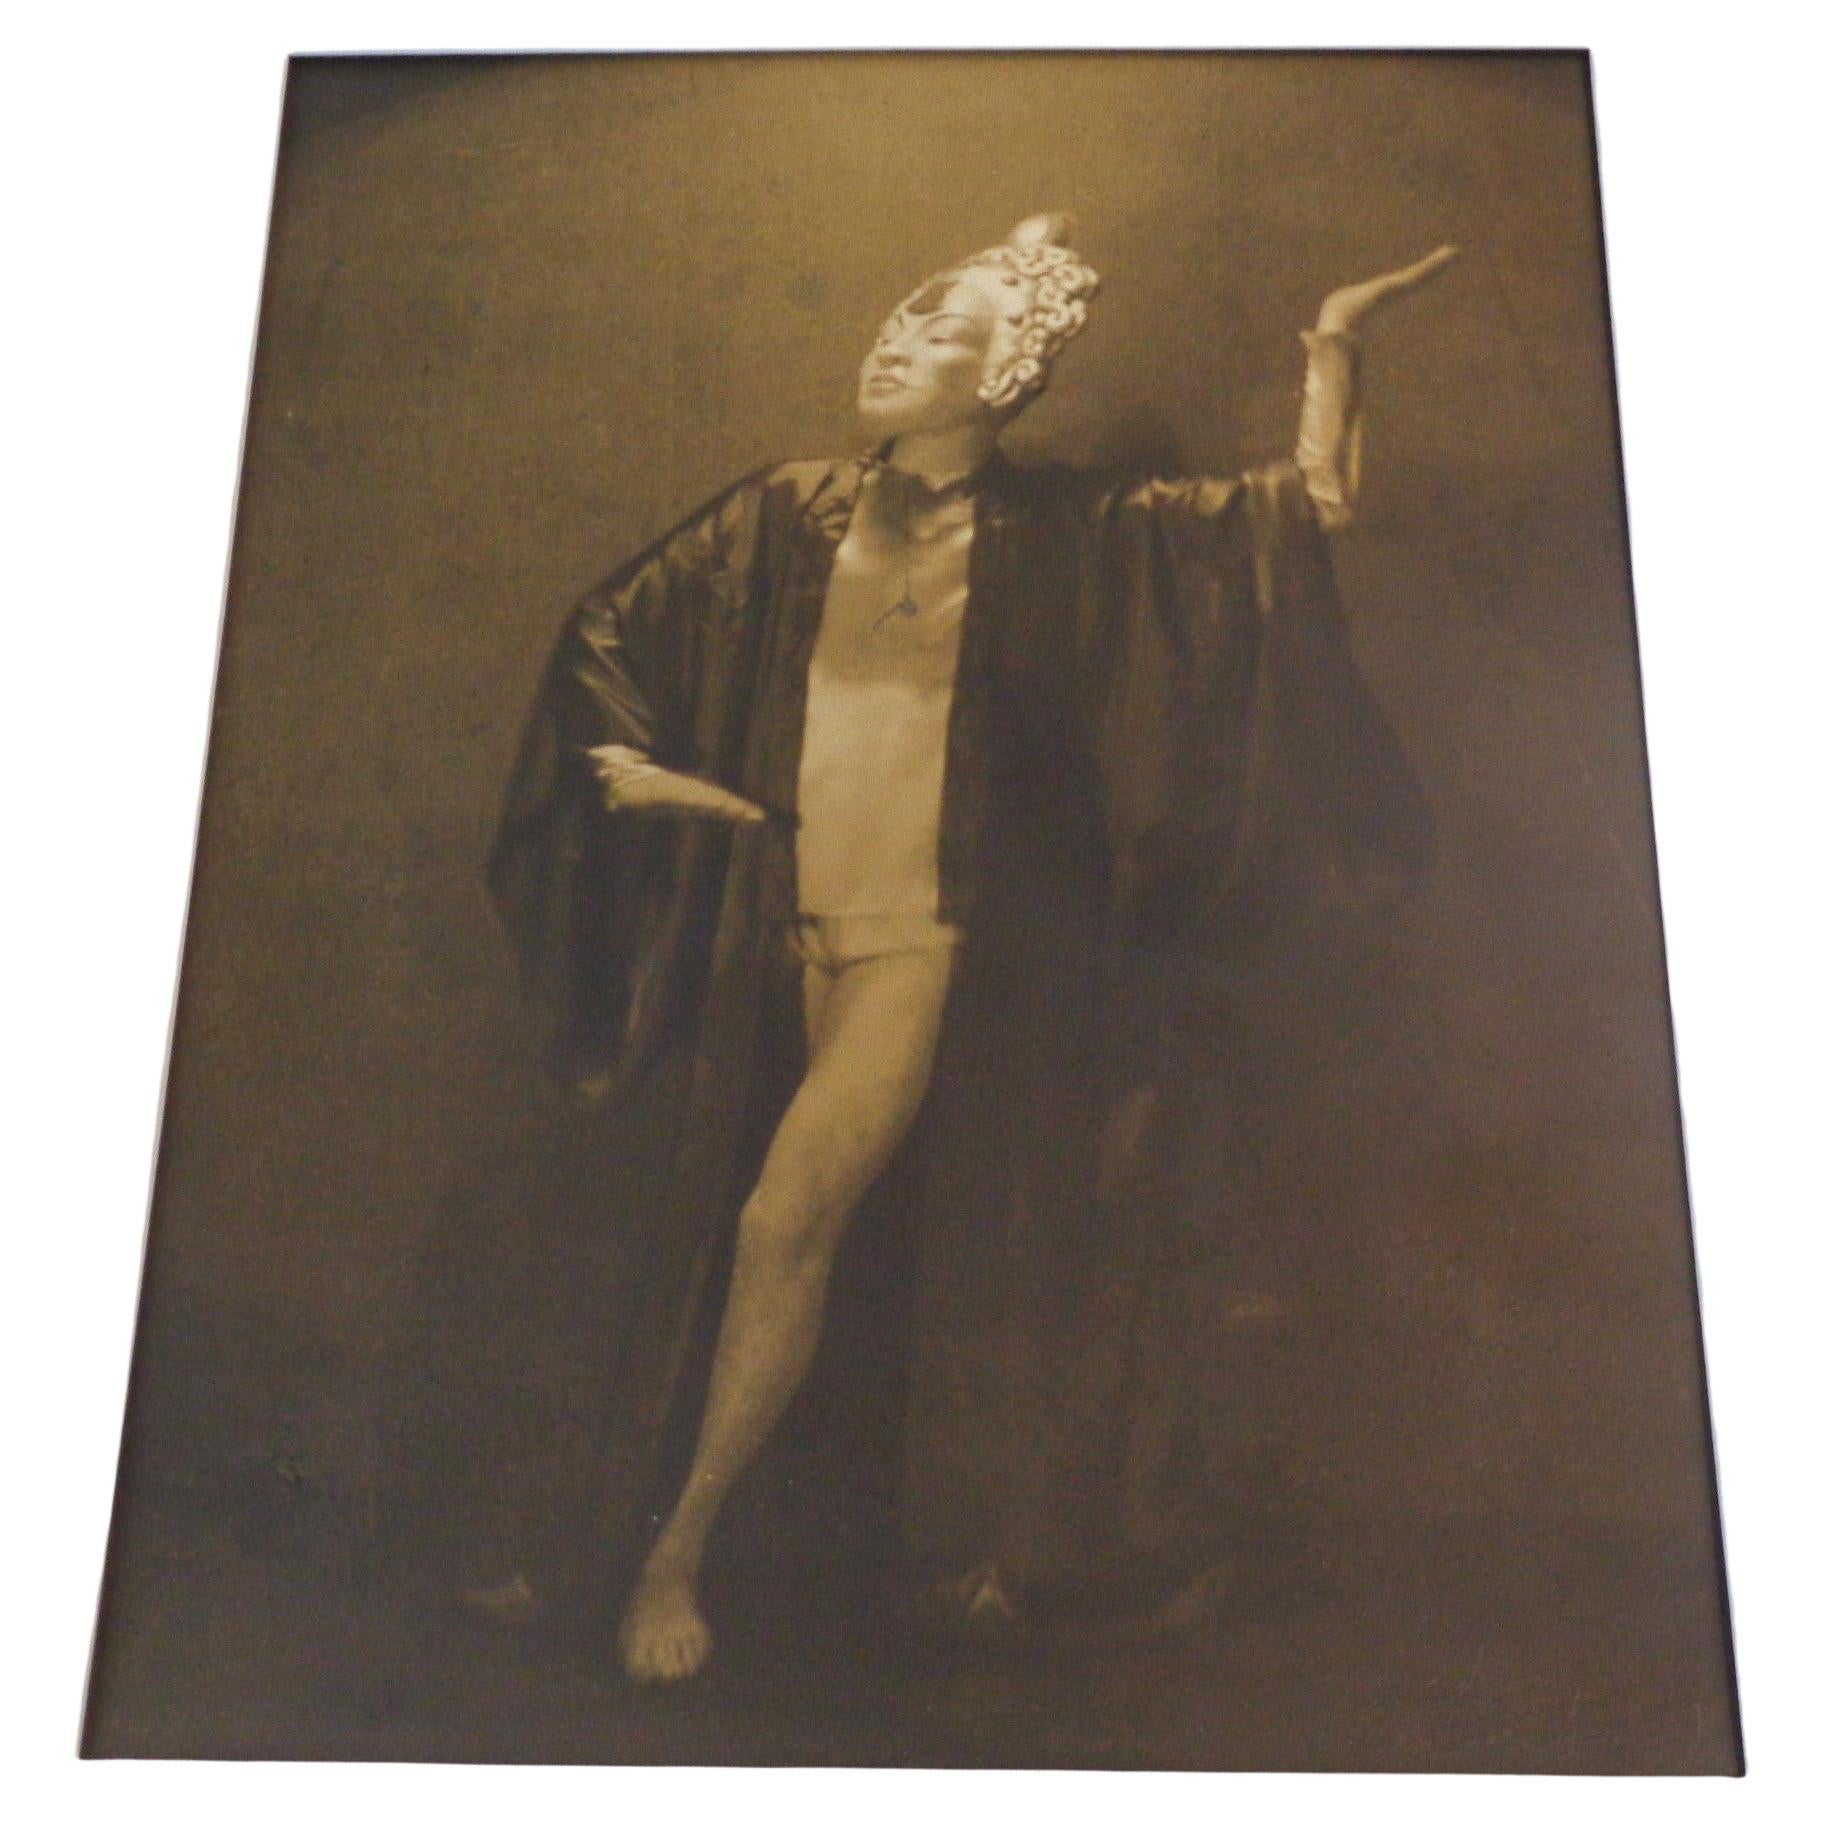 Original Pictorialist Sepia Tone Gelatin Silver Print Photograph Exotic Dancer